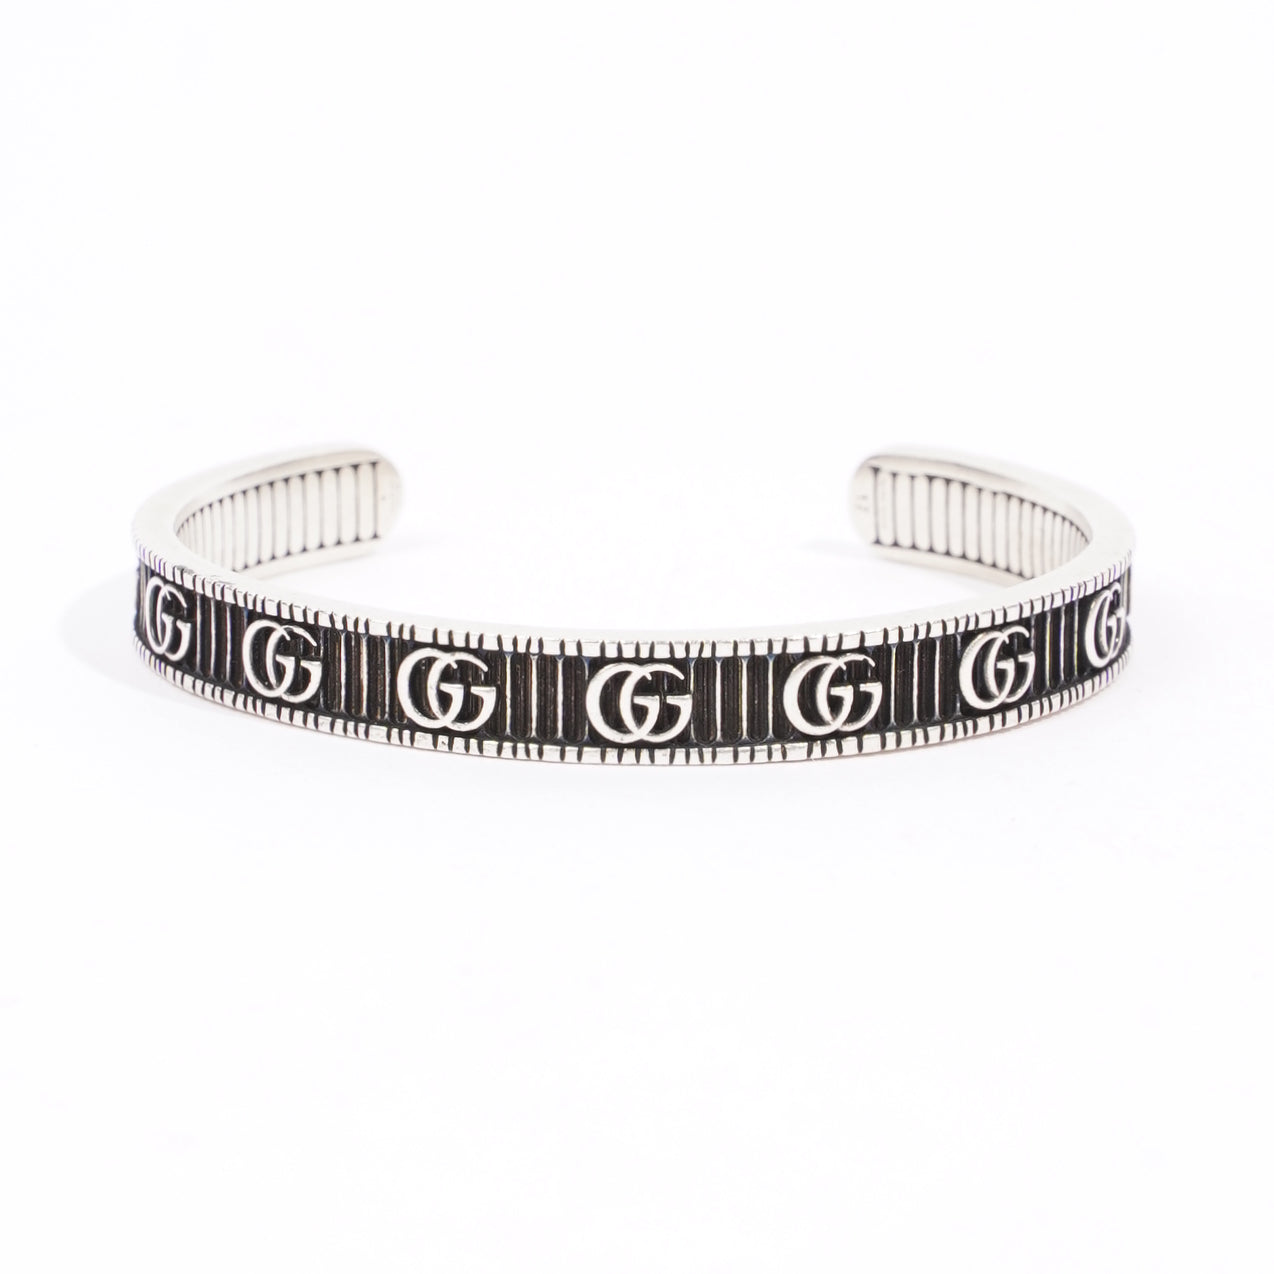 Gucci bracelet box with - Gem